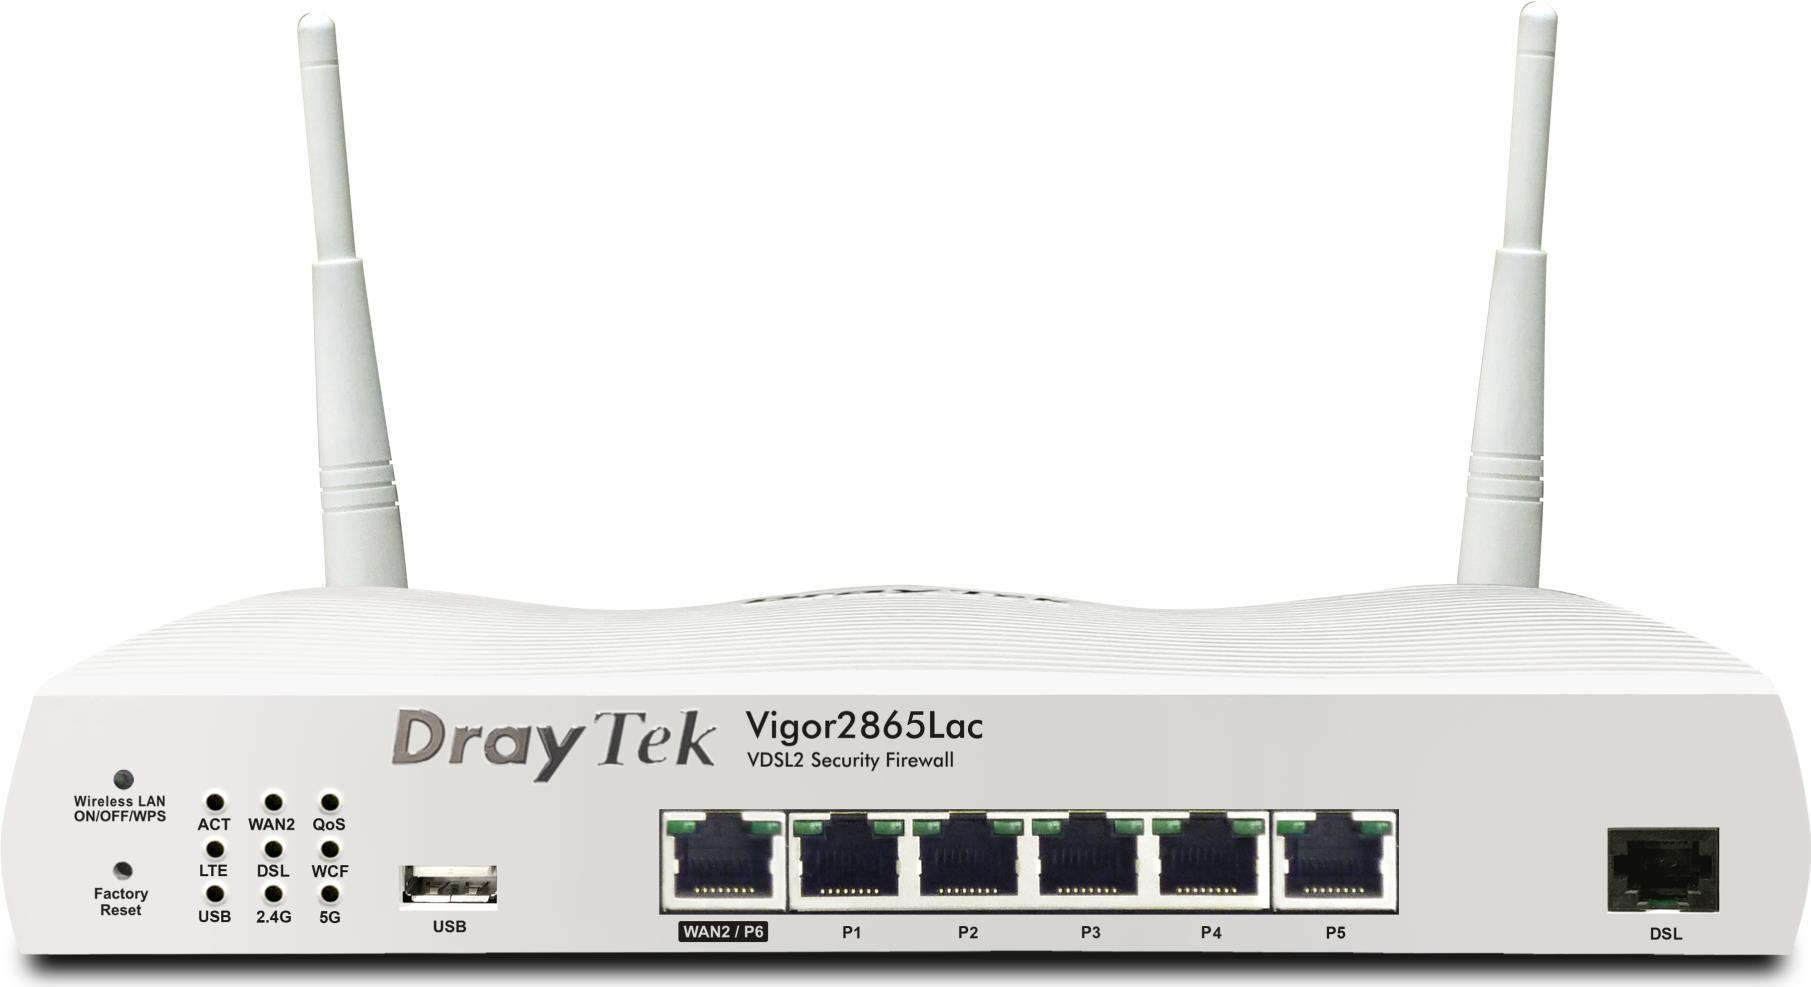 DrayTek Vigor 2865Vac (Annex-B) Dual-Wan Router mit integriertem ADSL2/VDSL2/Supervectoring Modem als WAN1 (Annex-B) und Gigabit Ethernet WAN2, 5 x Gigabit LAN, 32xVPN, Firewall, Contentfilter, zentralem AP- und Switchmanagement, VoIP mit 2x FXS-Ports (v2865Vac-B-DE-AT-CH)